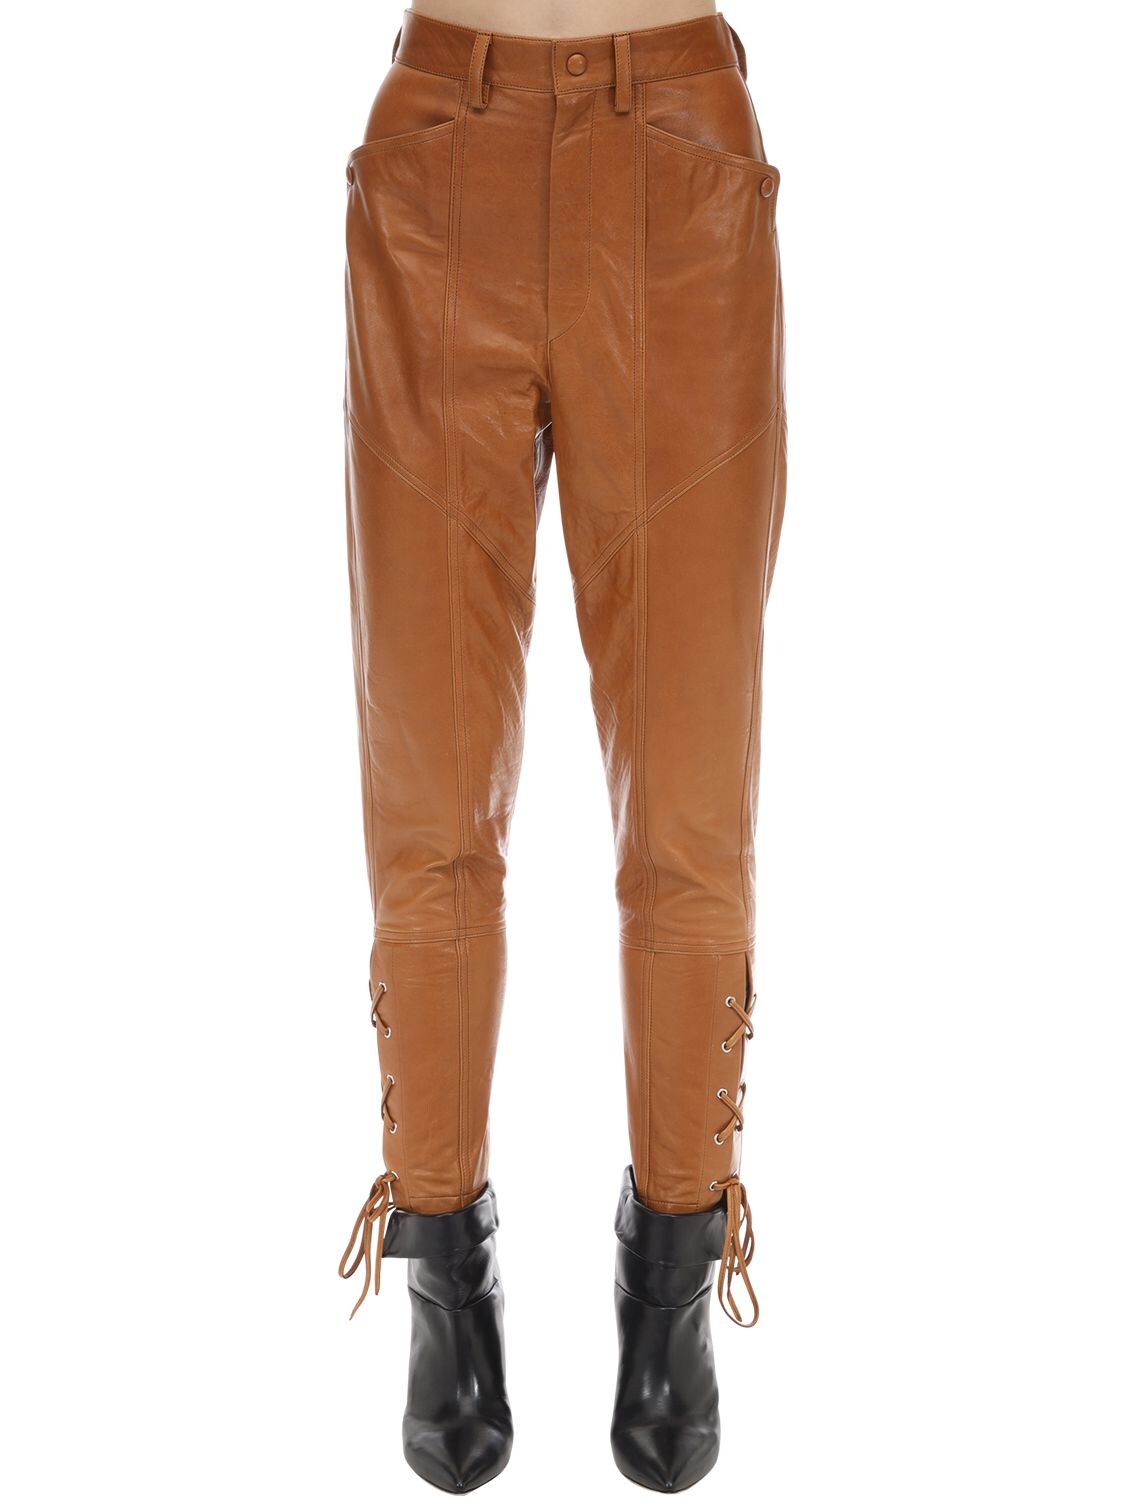 ISABEL MARANT CADIX HIGH WAIST LEATHER trousers,70I1JT004-MJNOTA2